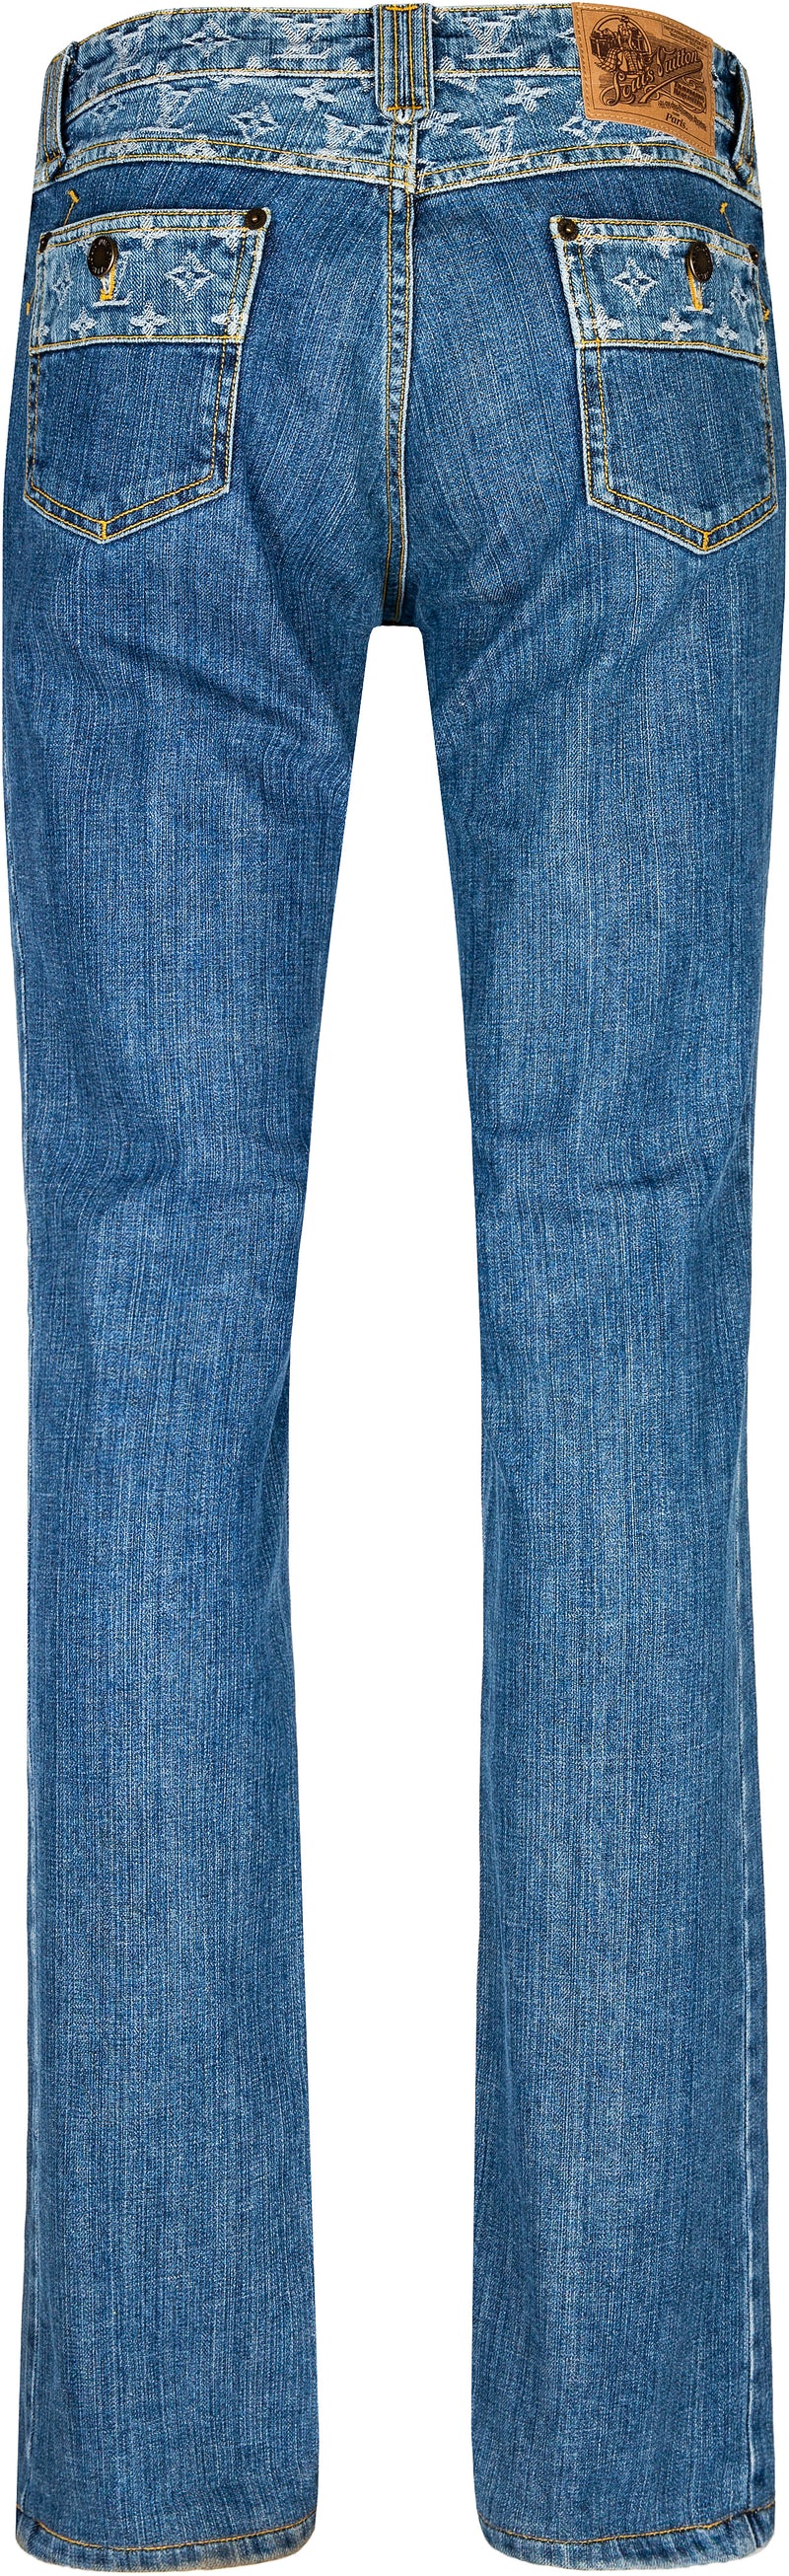 Louis Vuitton Monogram Denim Jeans